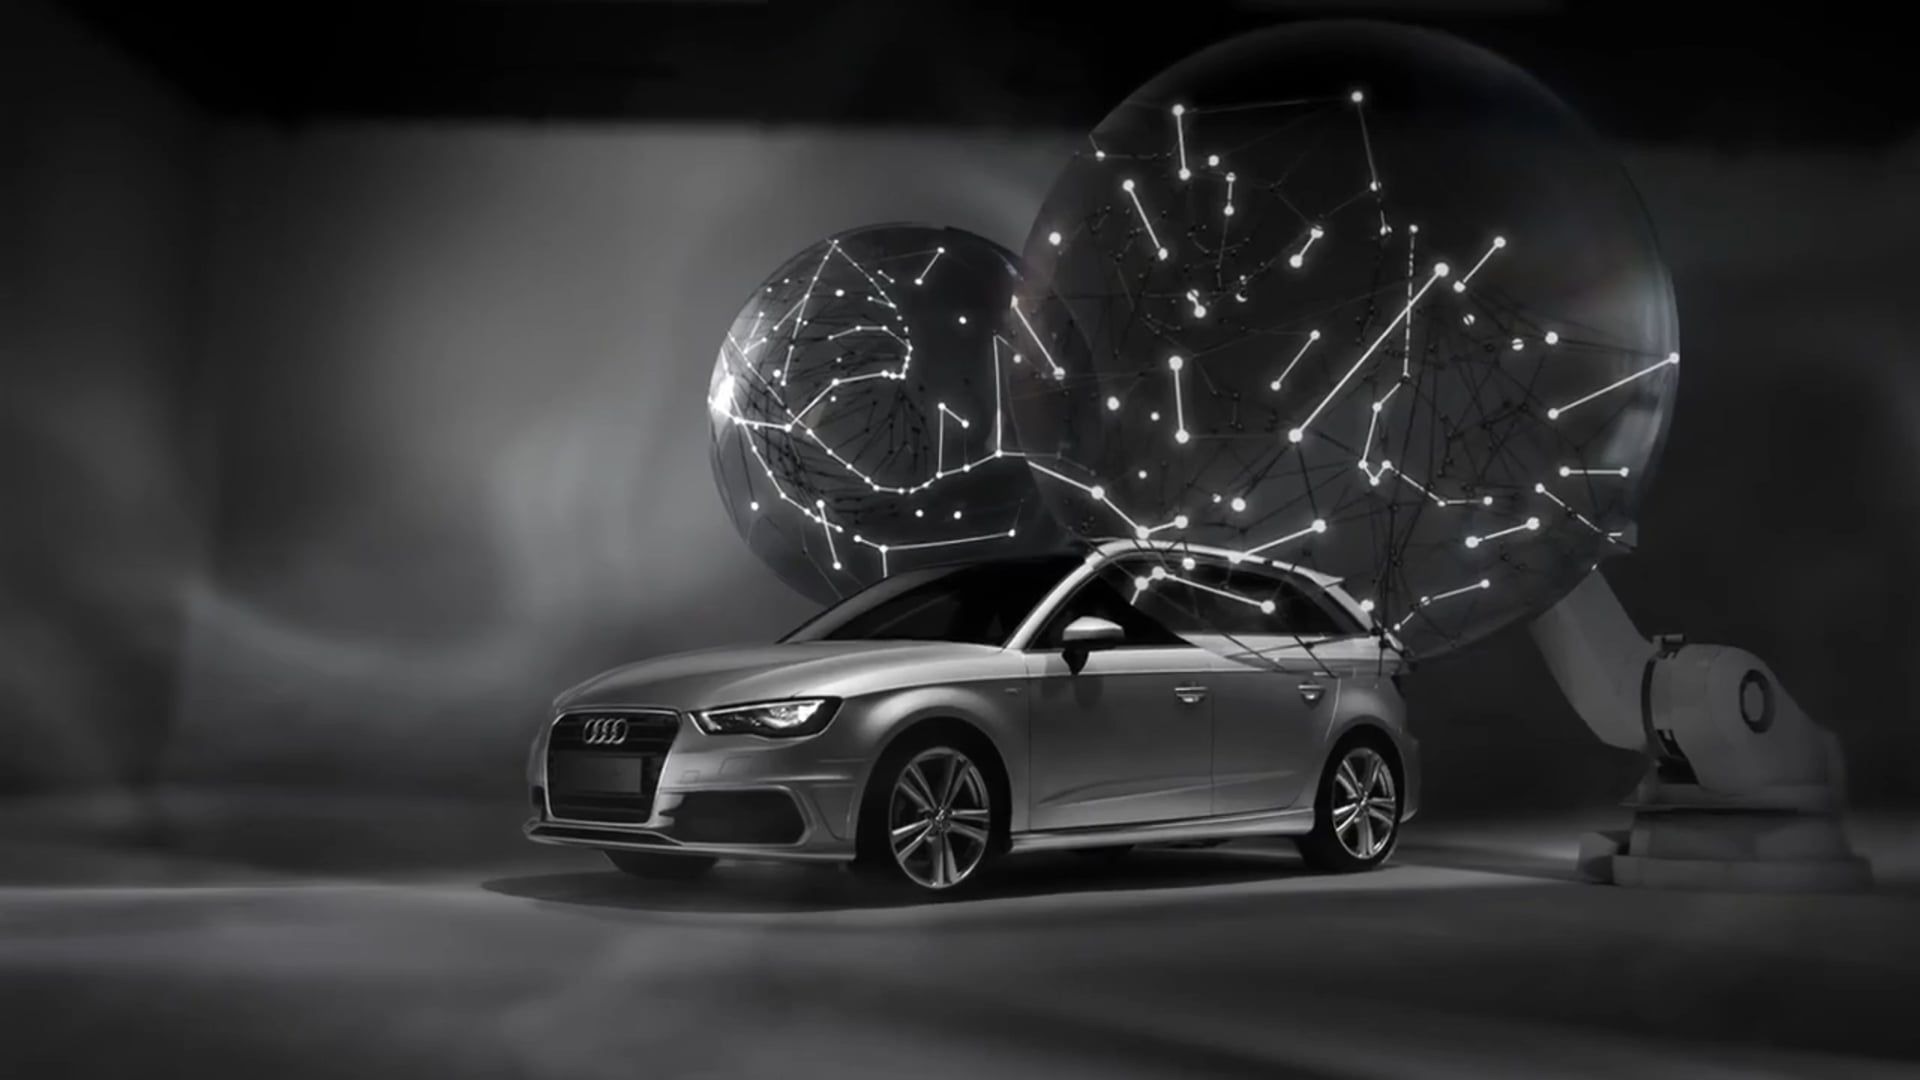 Audi | Behind the Scenes